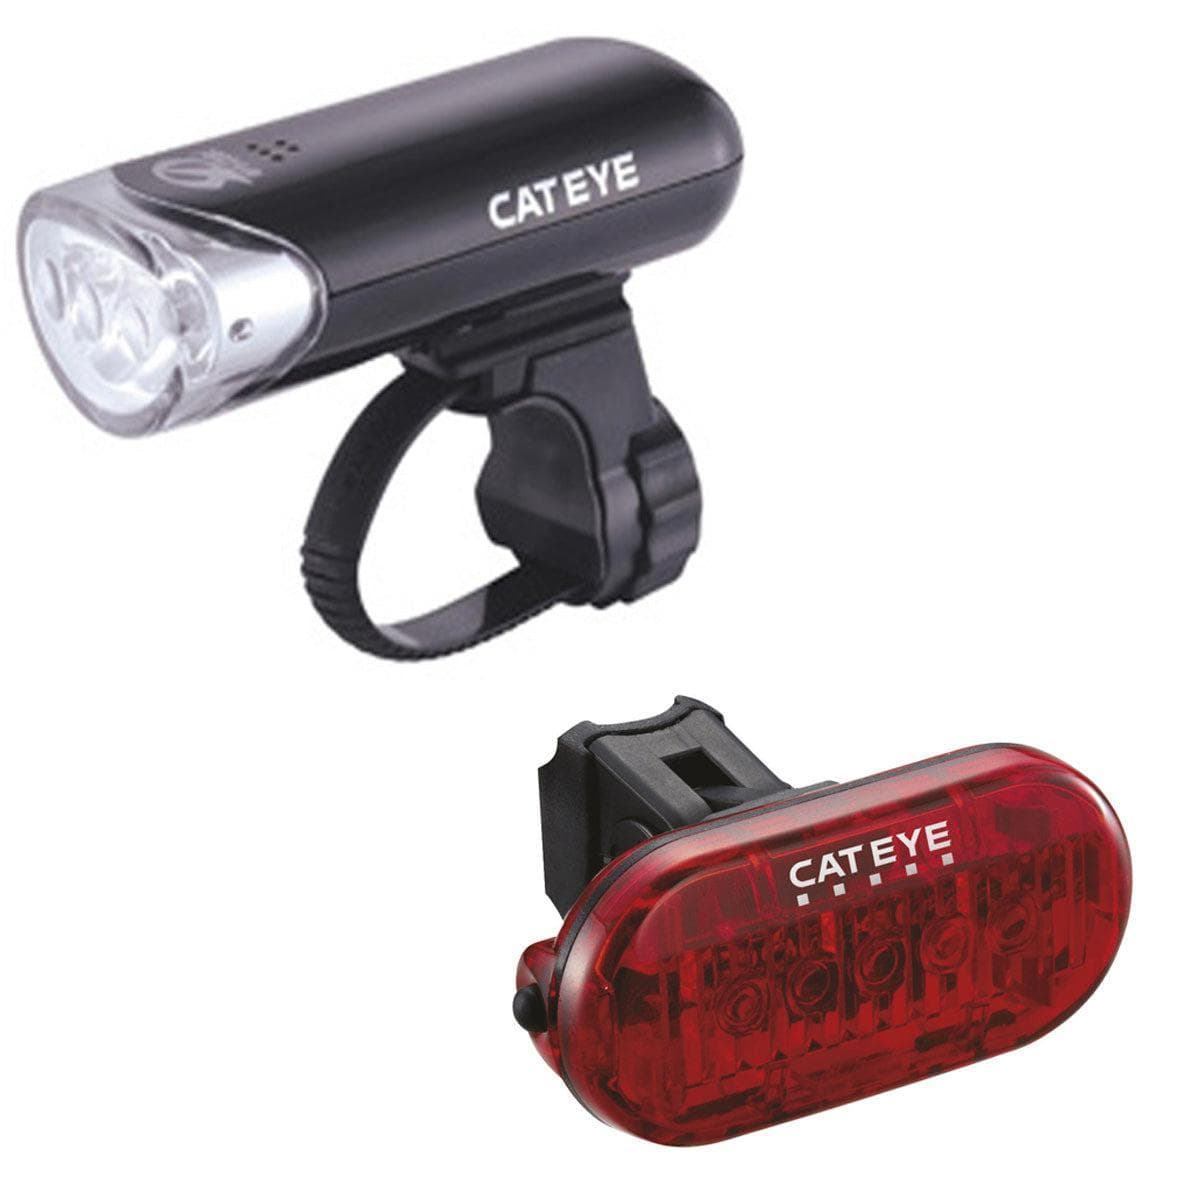 Cateye El135 Front Light & Omni 5 Rear Light Set: